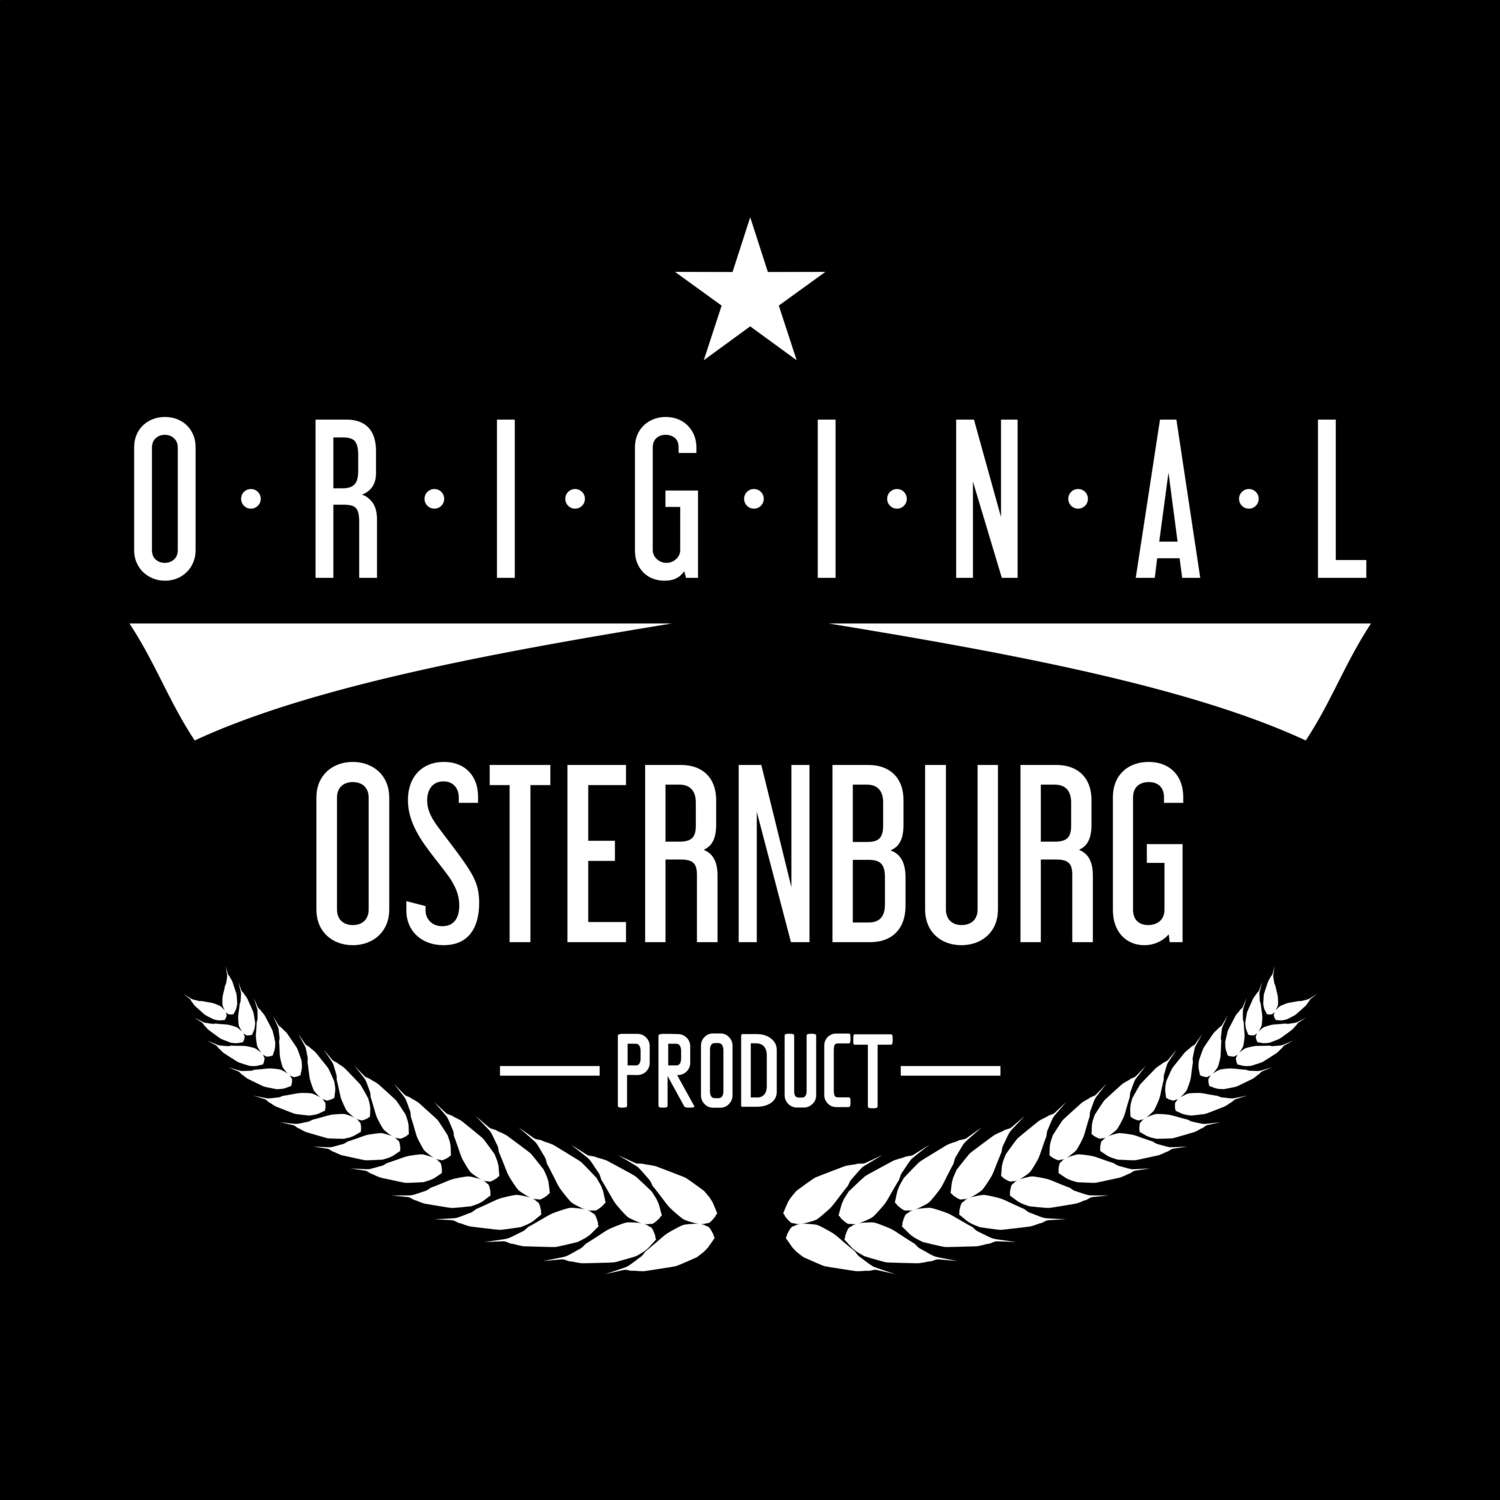 Osternburg T-Shirt »Original Product«